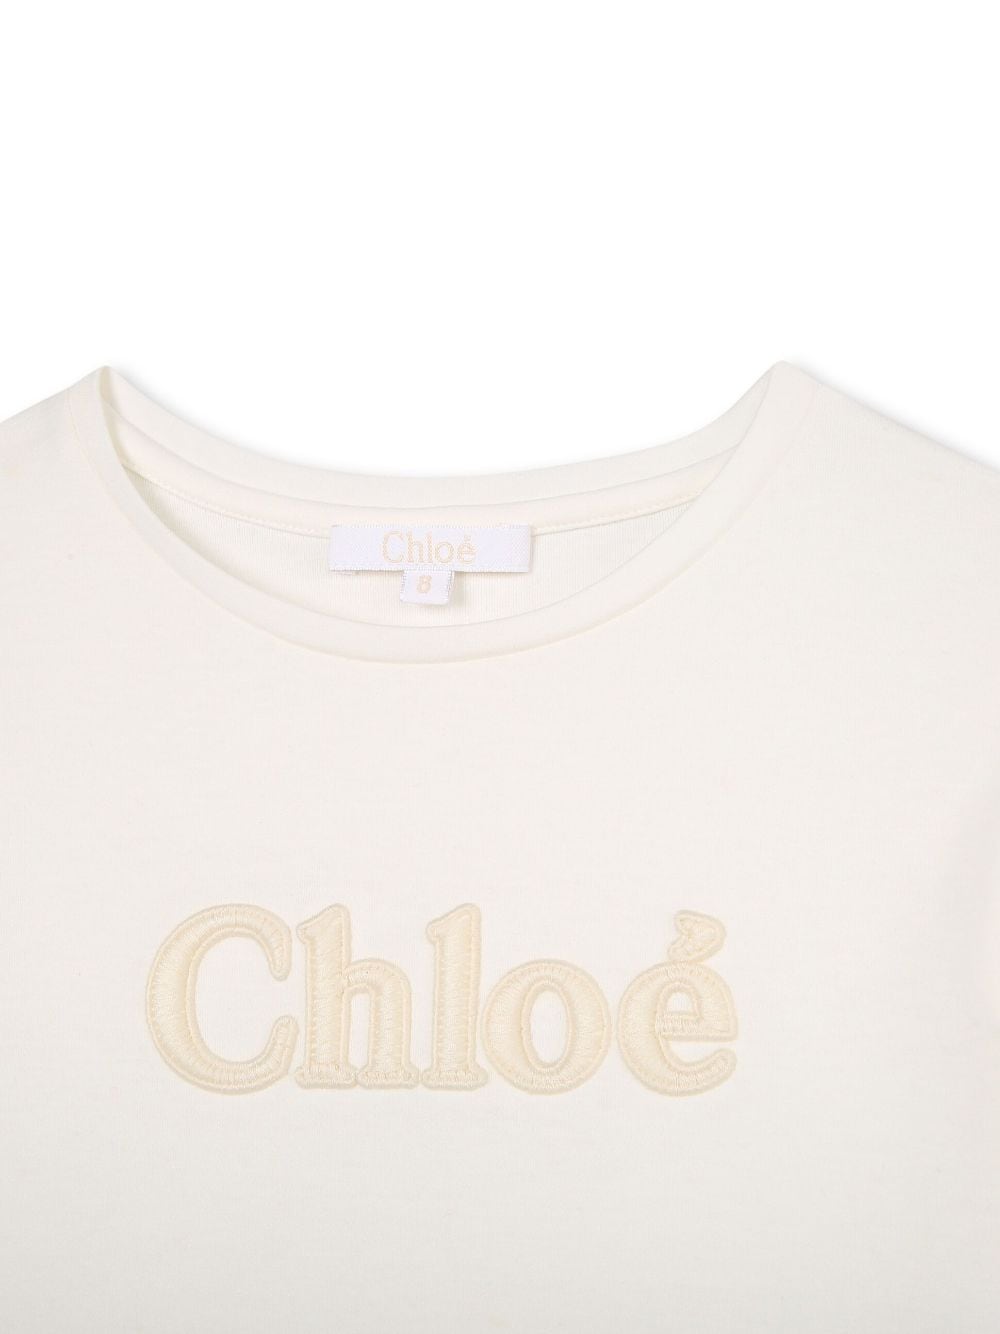 White cotton jersey girl CHLOE' t-shirt | Carofiglio Junior